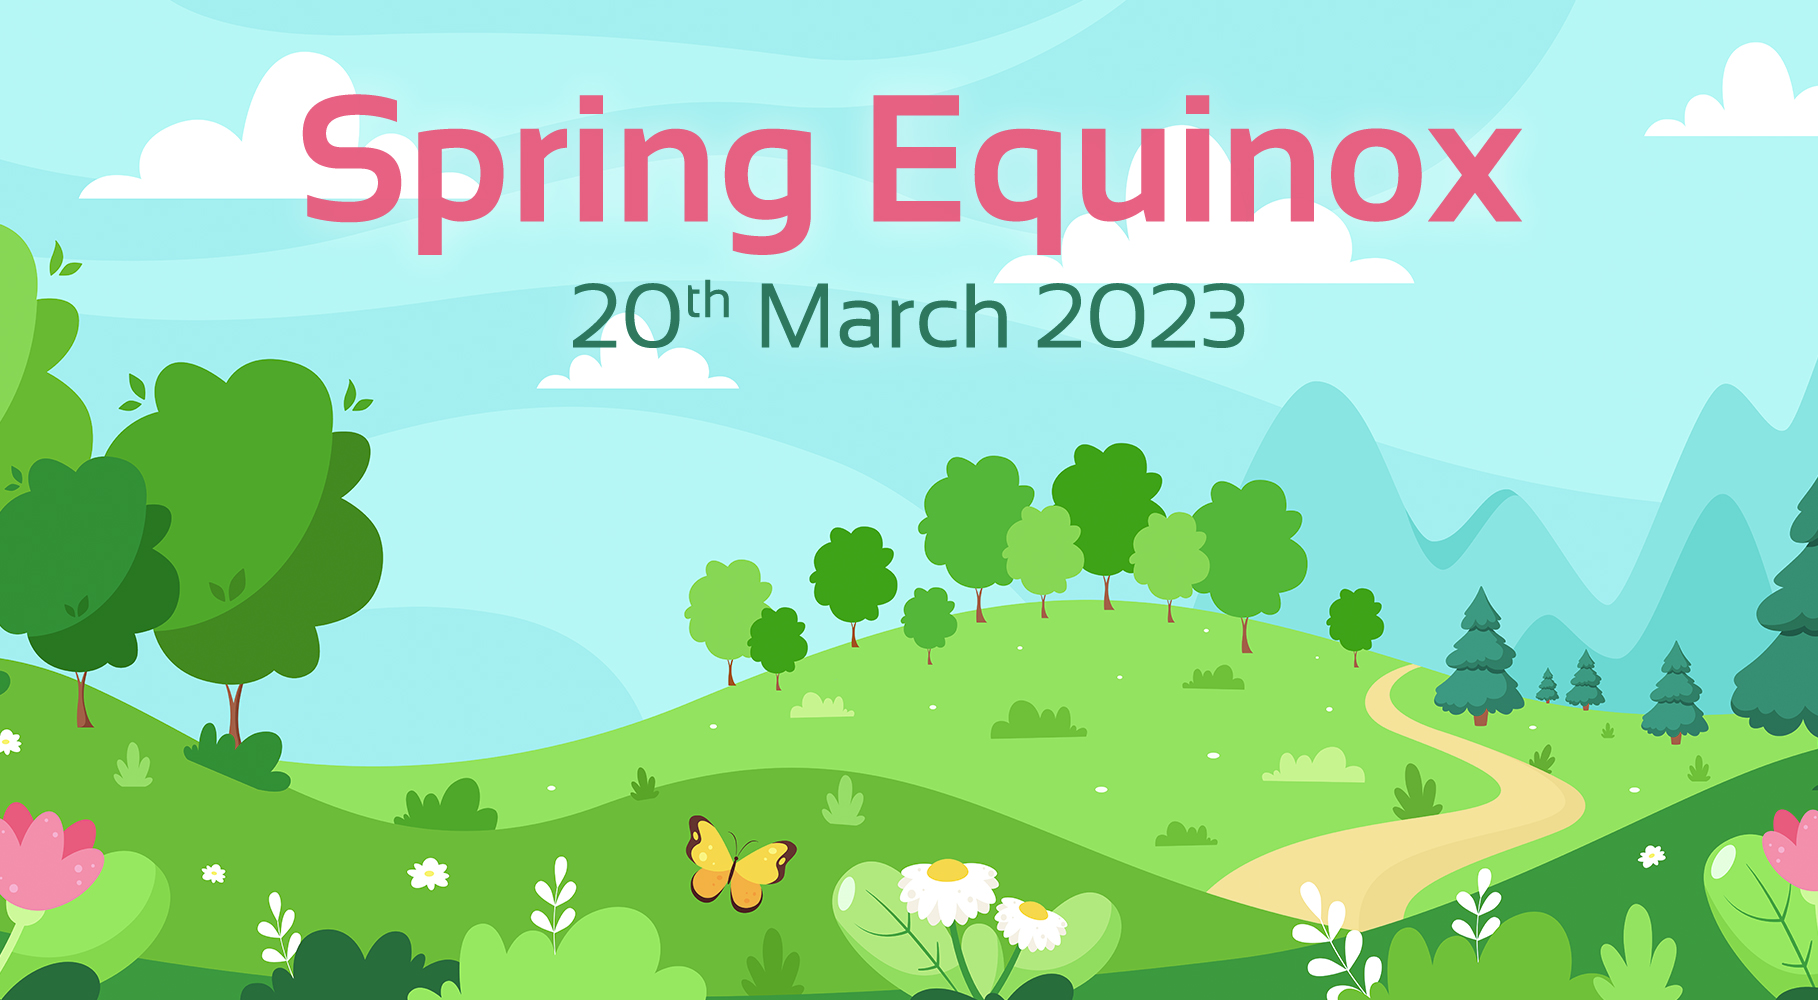 Spring Equinox 2023